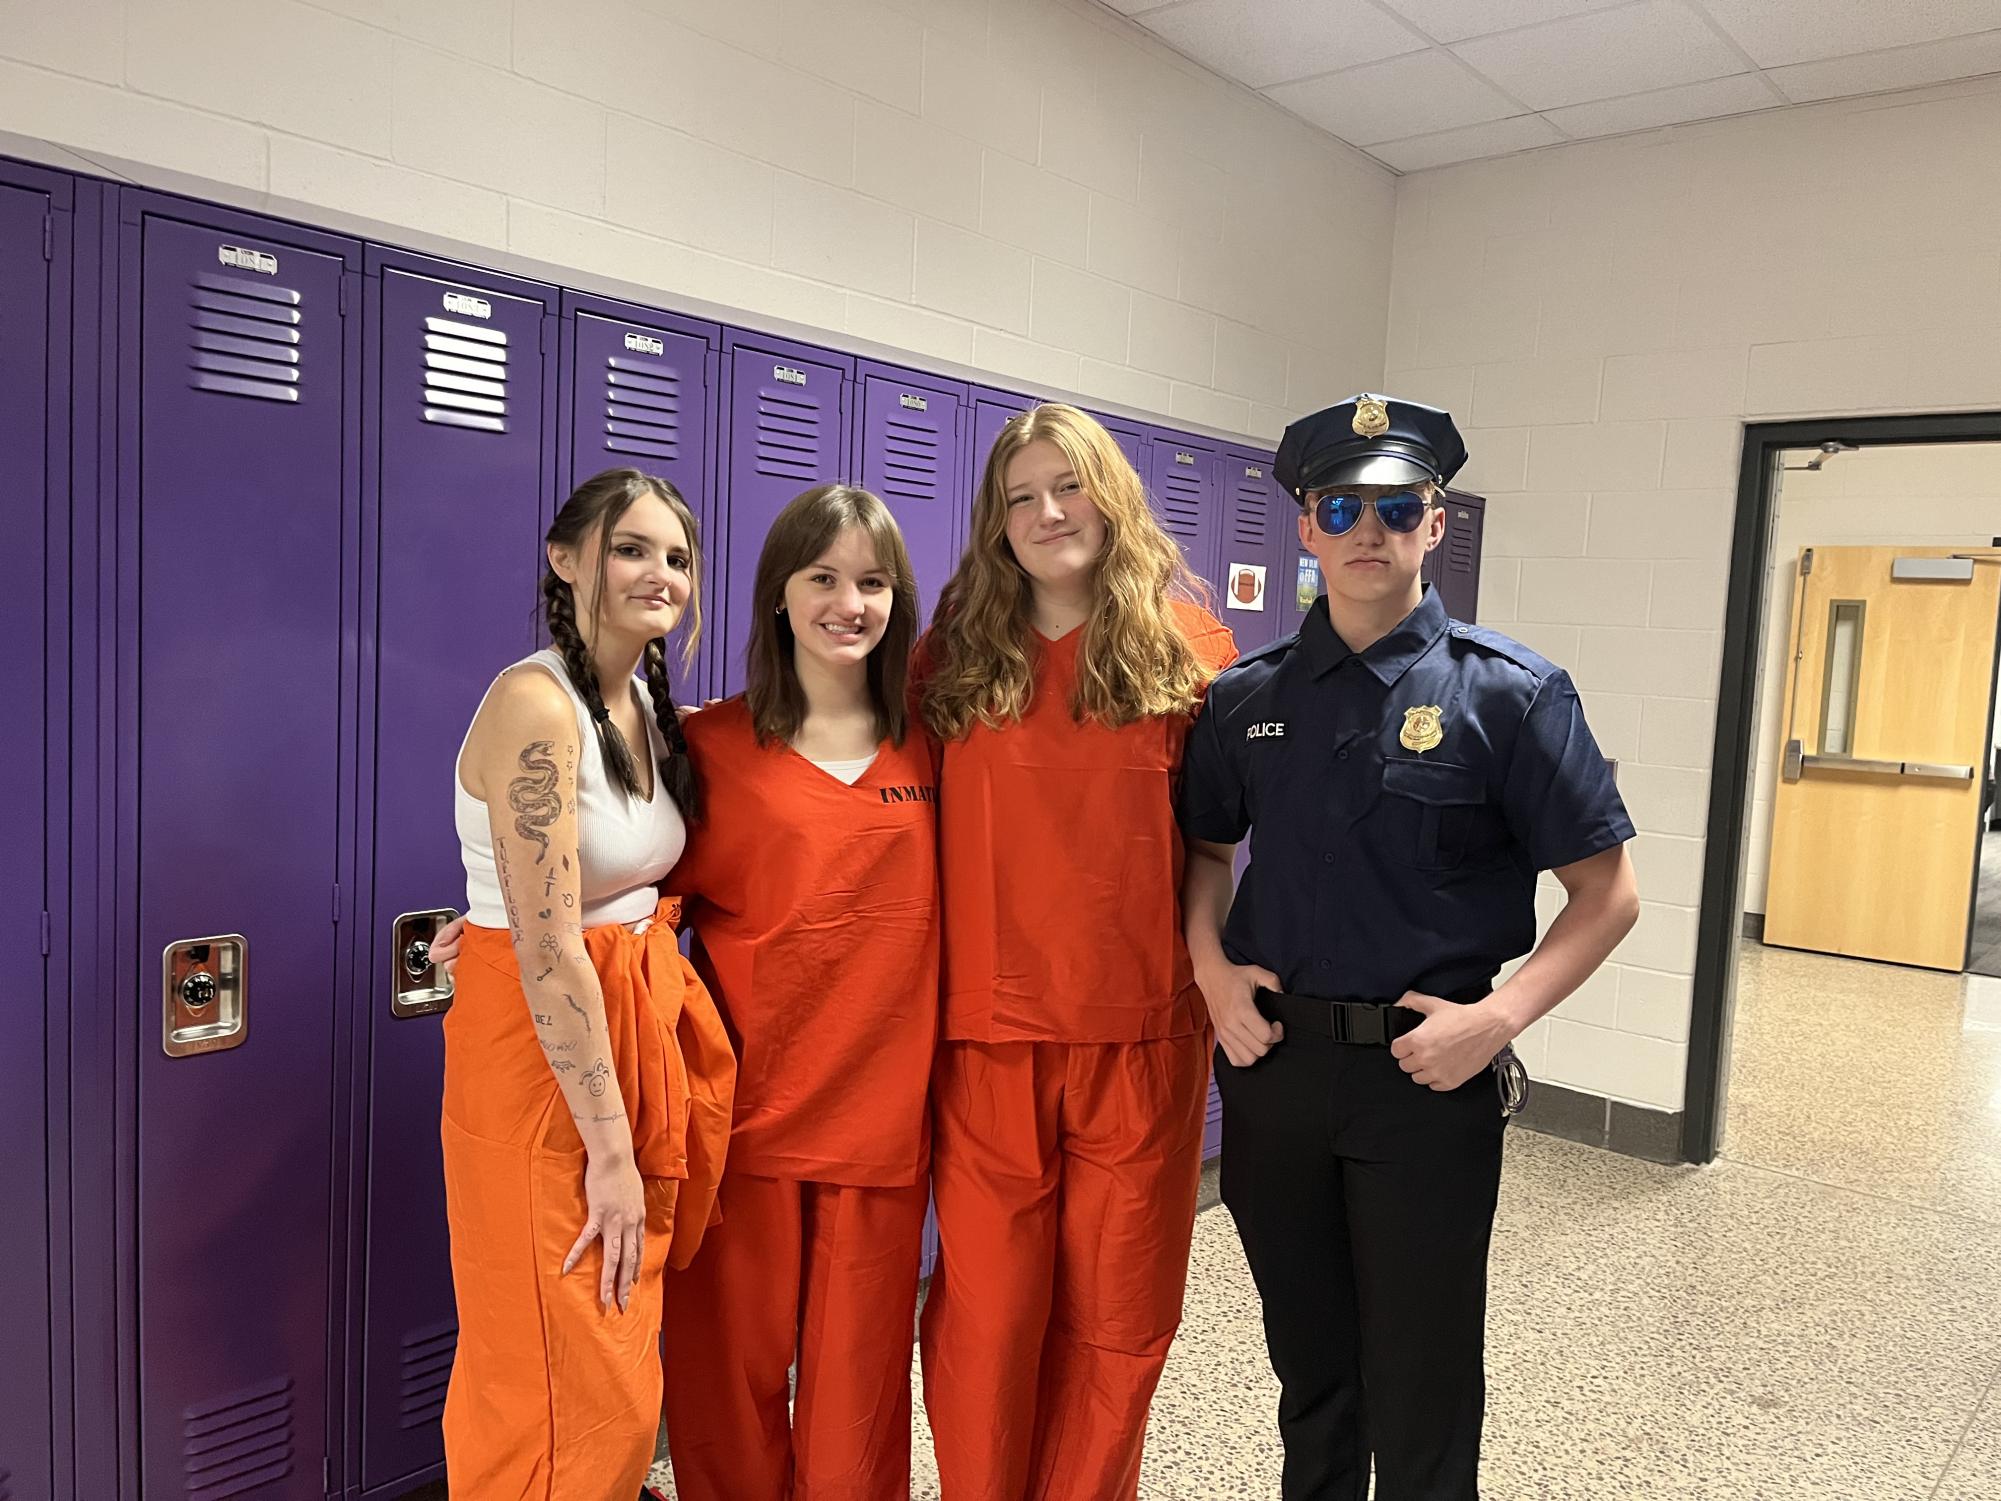 From left, juniors Katelyn Schumacher, Josie Stade, Amanda Vogel, and Brooks Miner pose in their jailhouse attire.